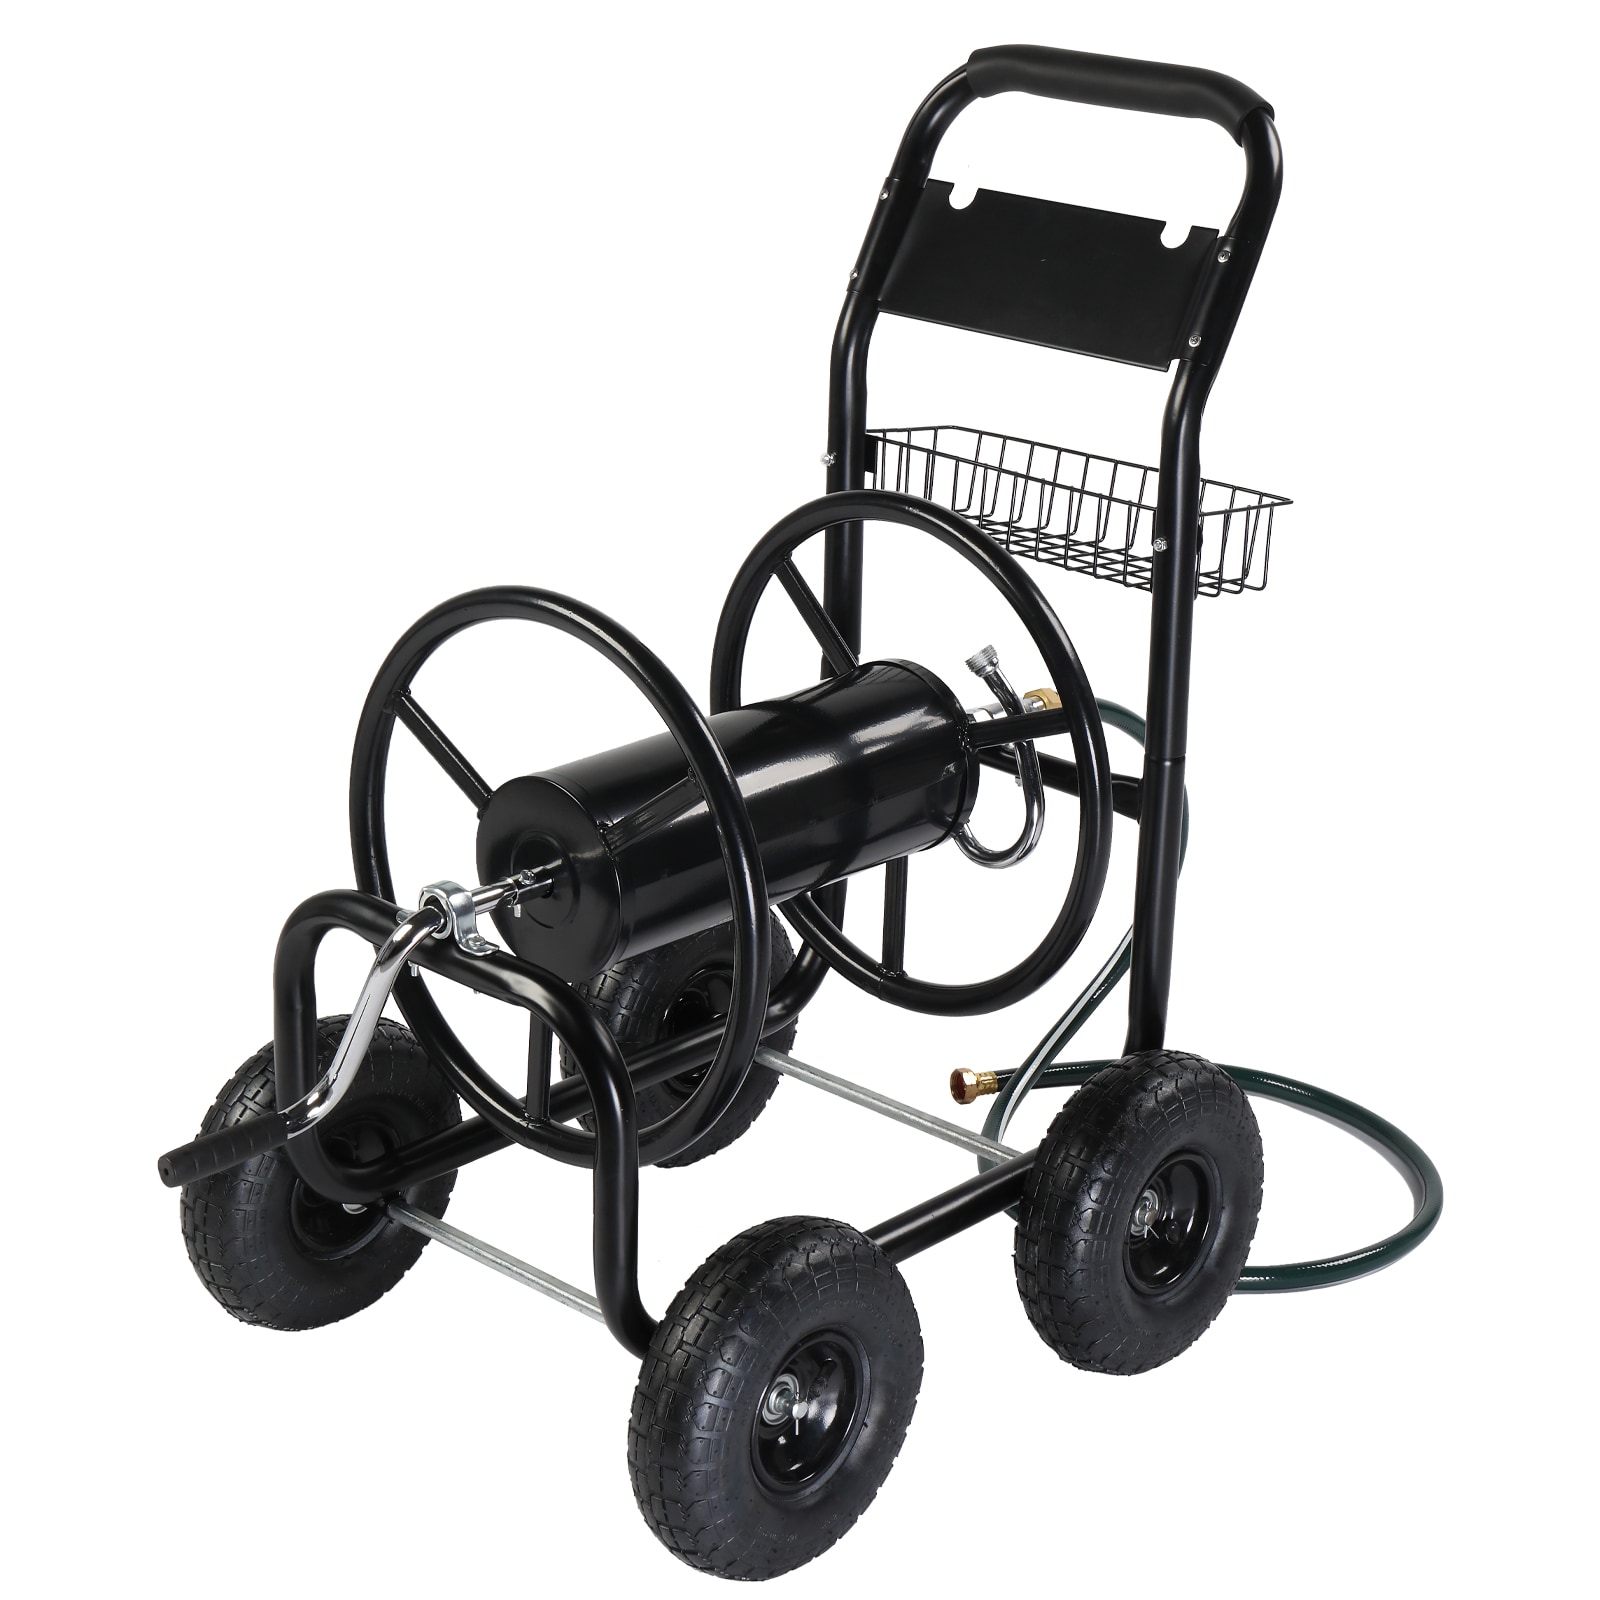 Outopee 4-Wheel Black Garden Hose Reel Cart at